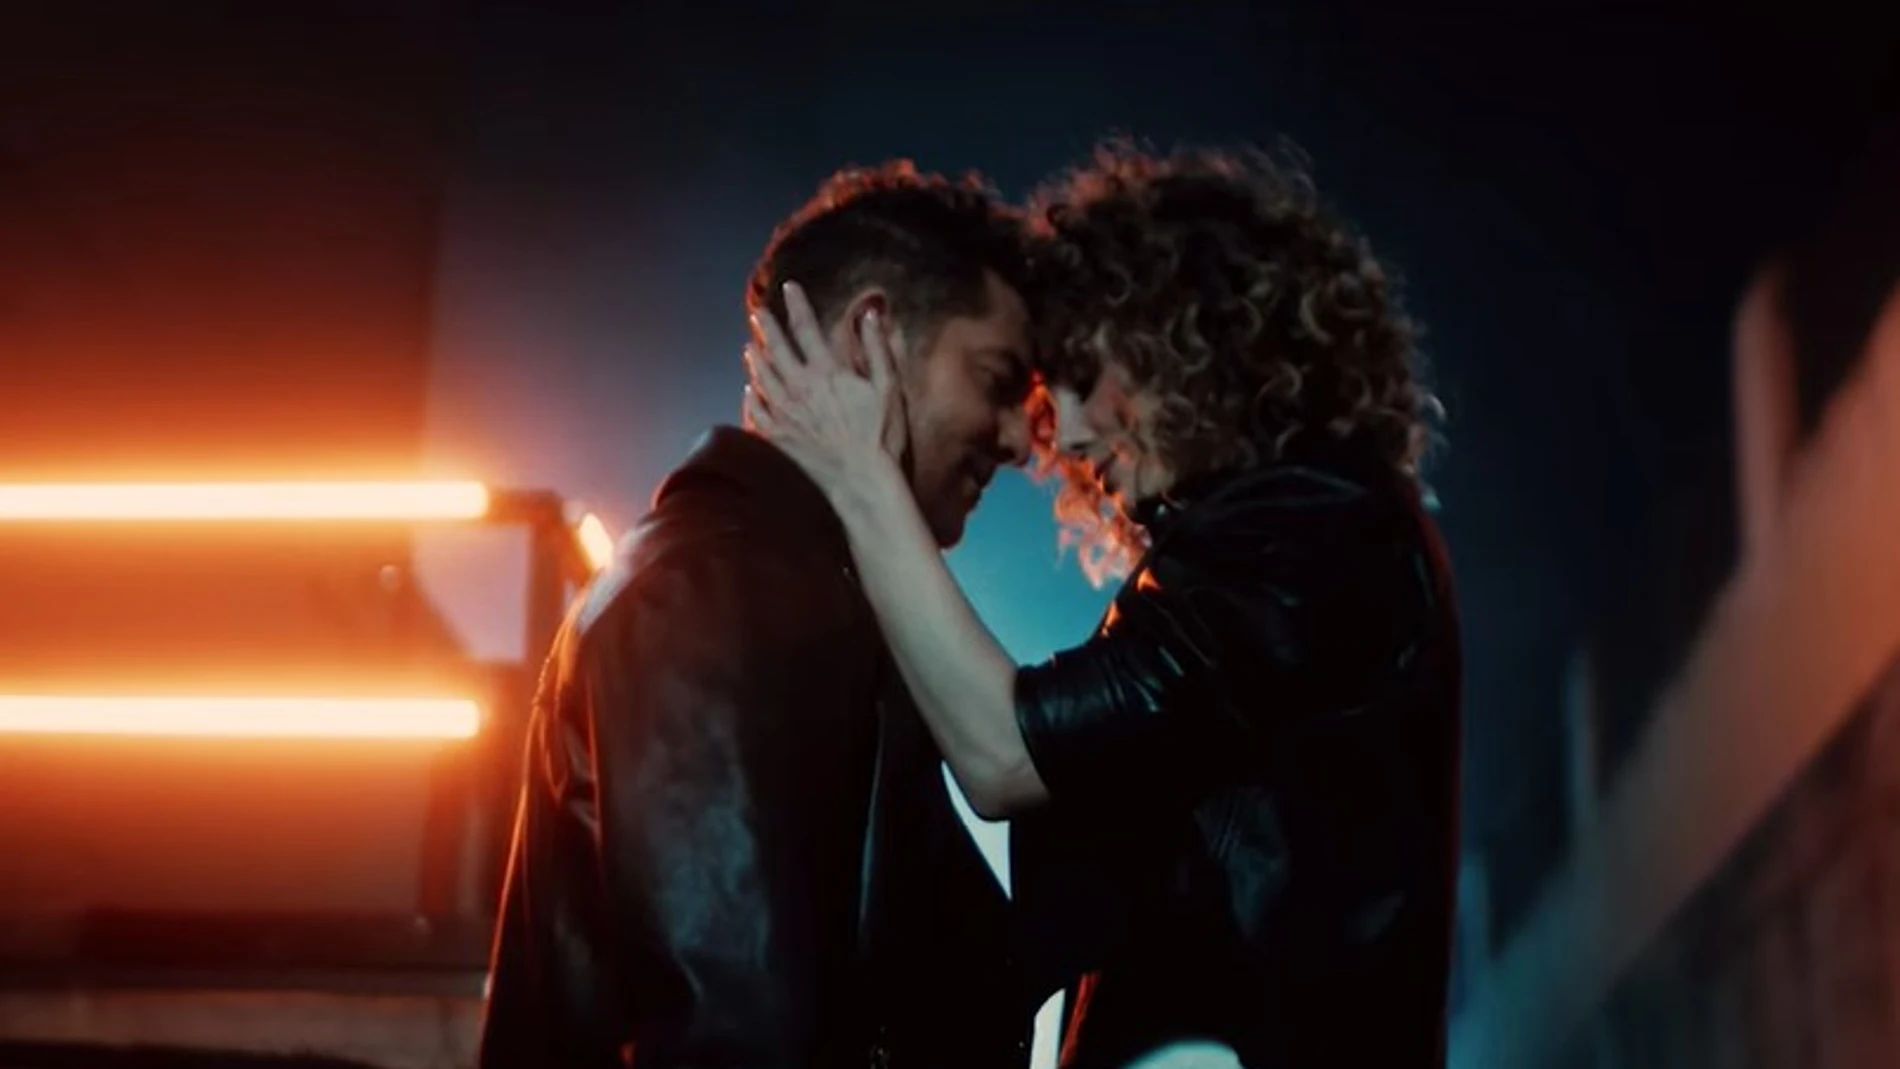 David Bisbal y Esther Acebo en el videoclip de 'Ajedrez'.